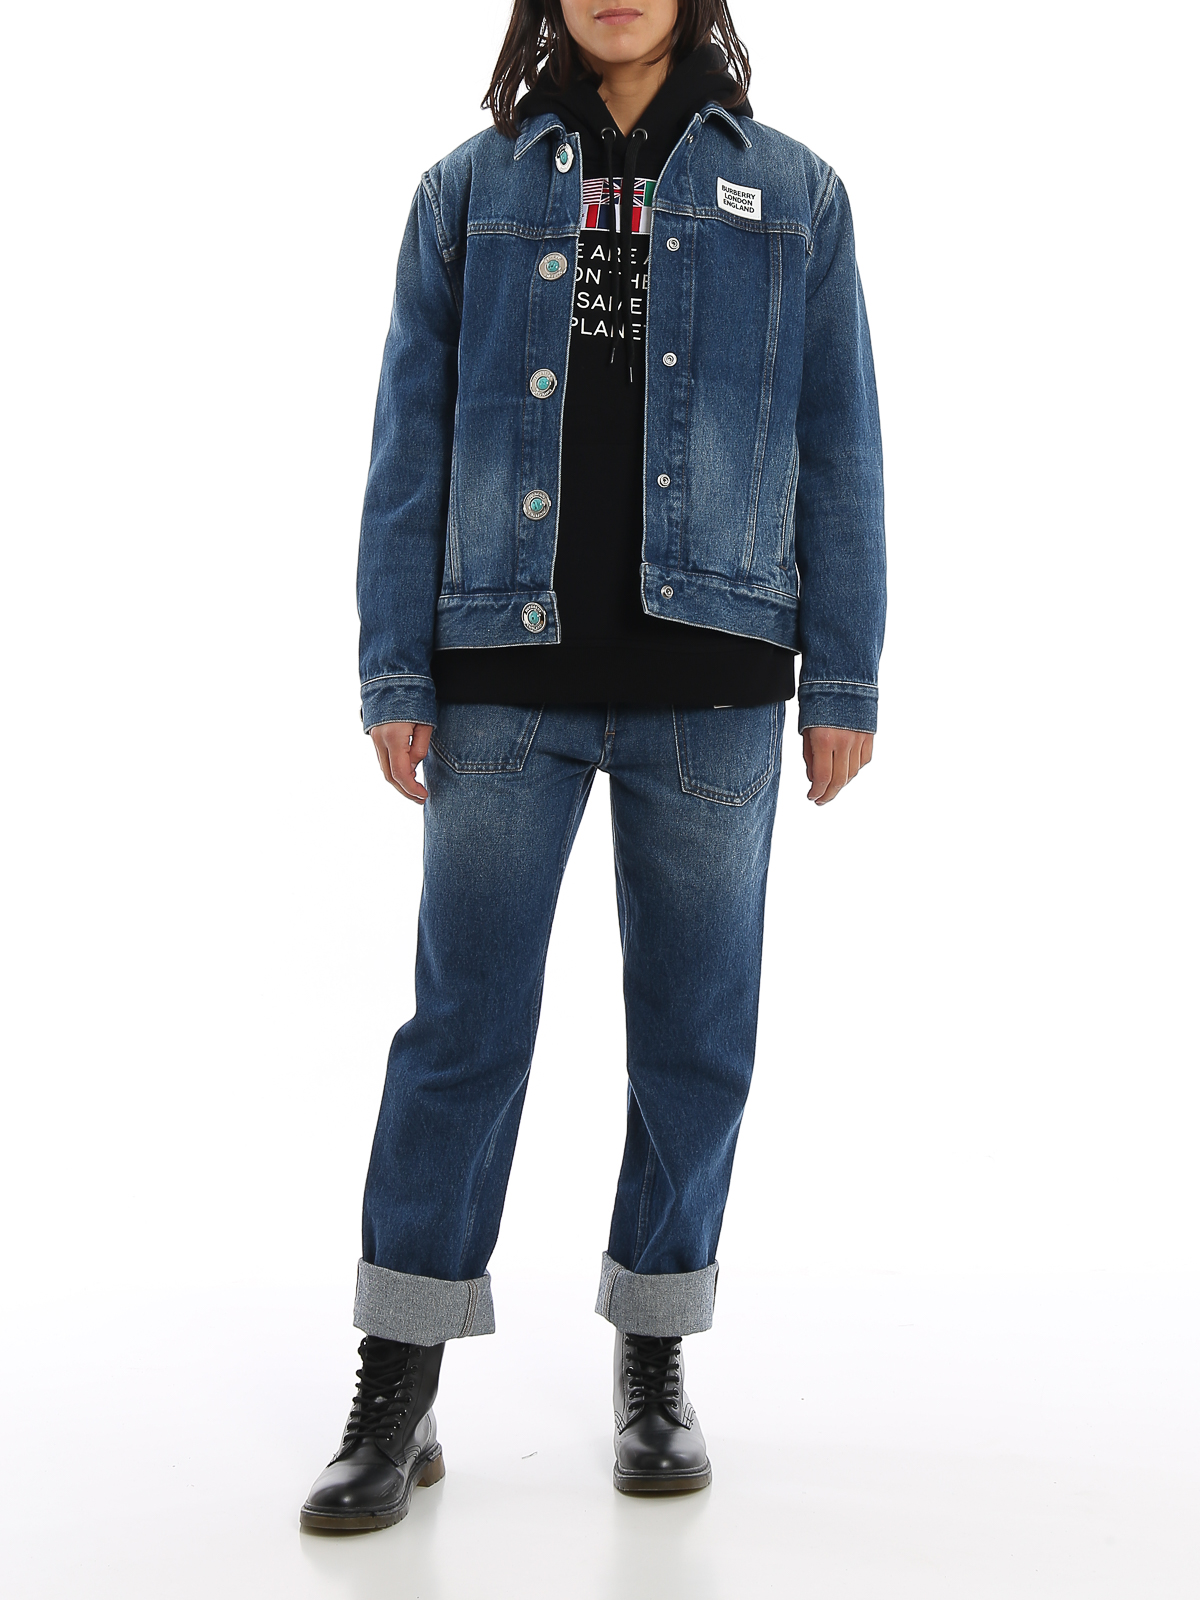 Actualizar 72+ imagen burberry jeans jacket - Abzlocal.mx